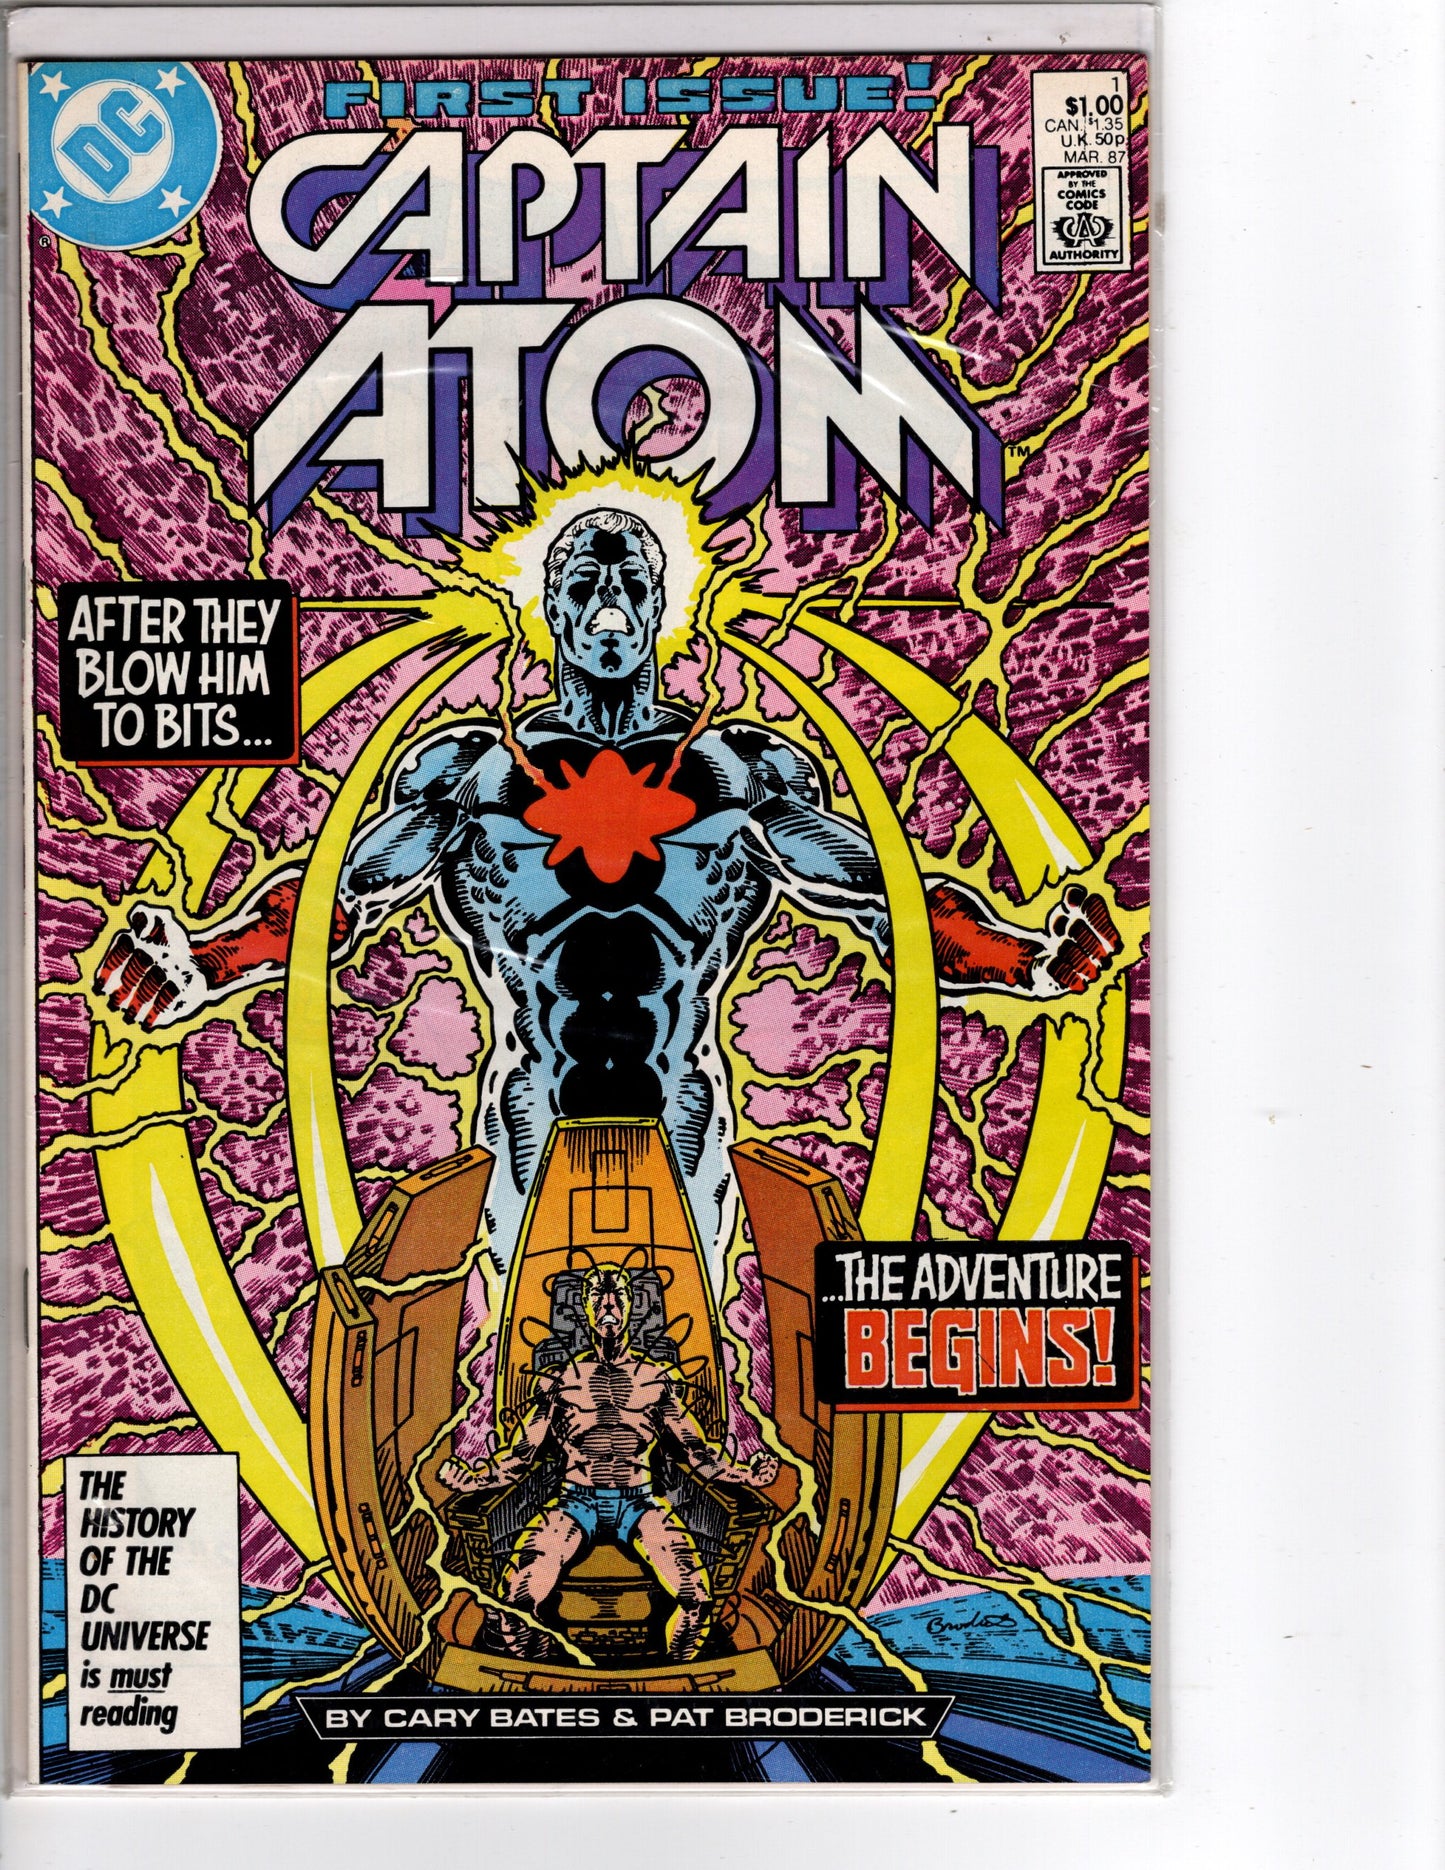 Captain Atom #1